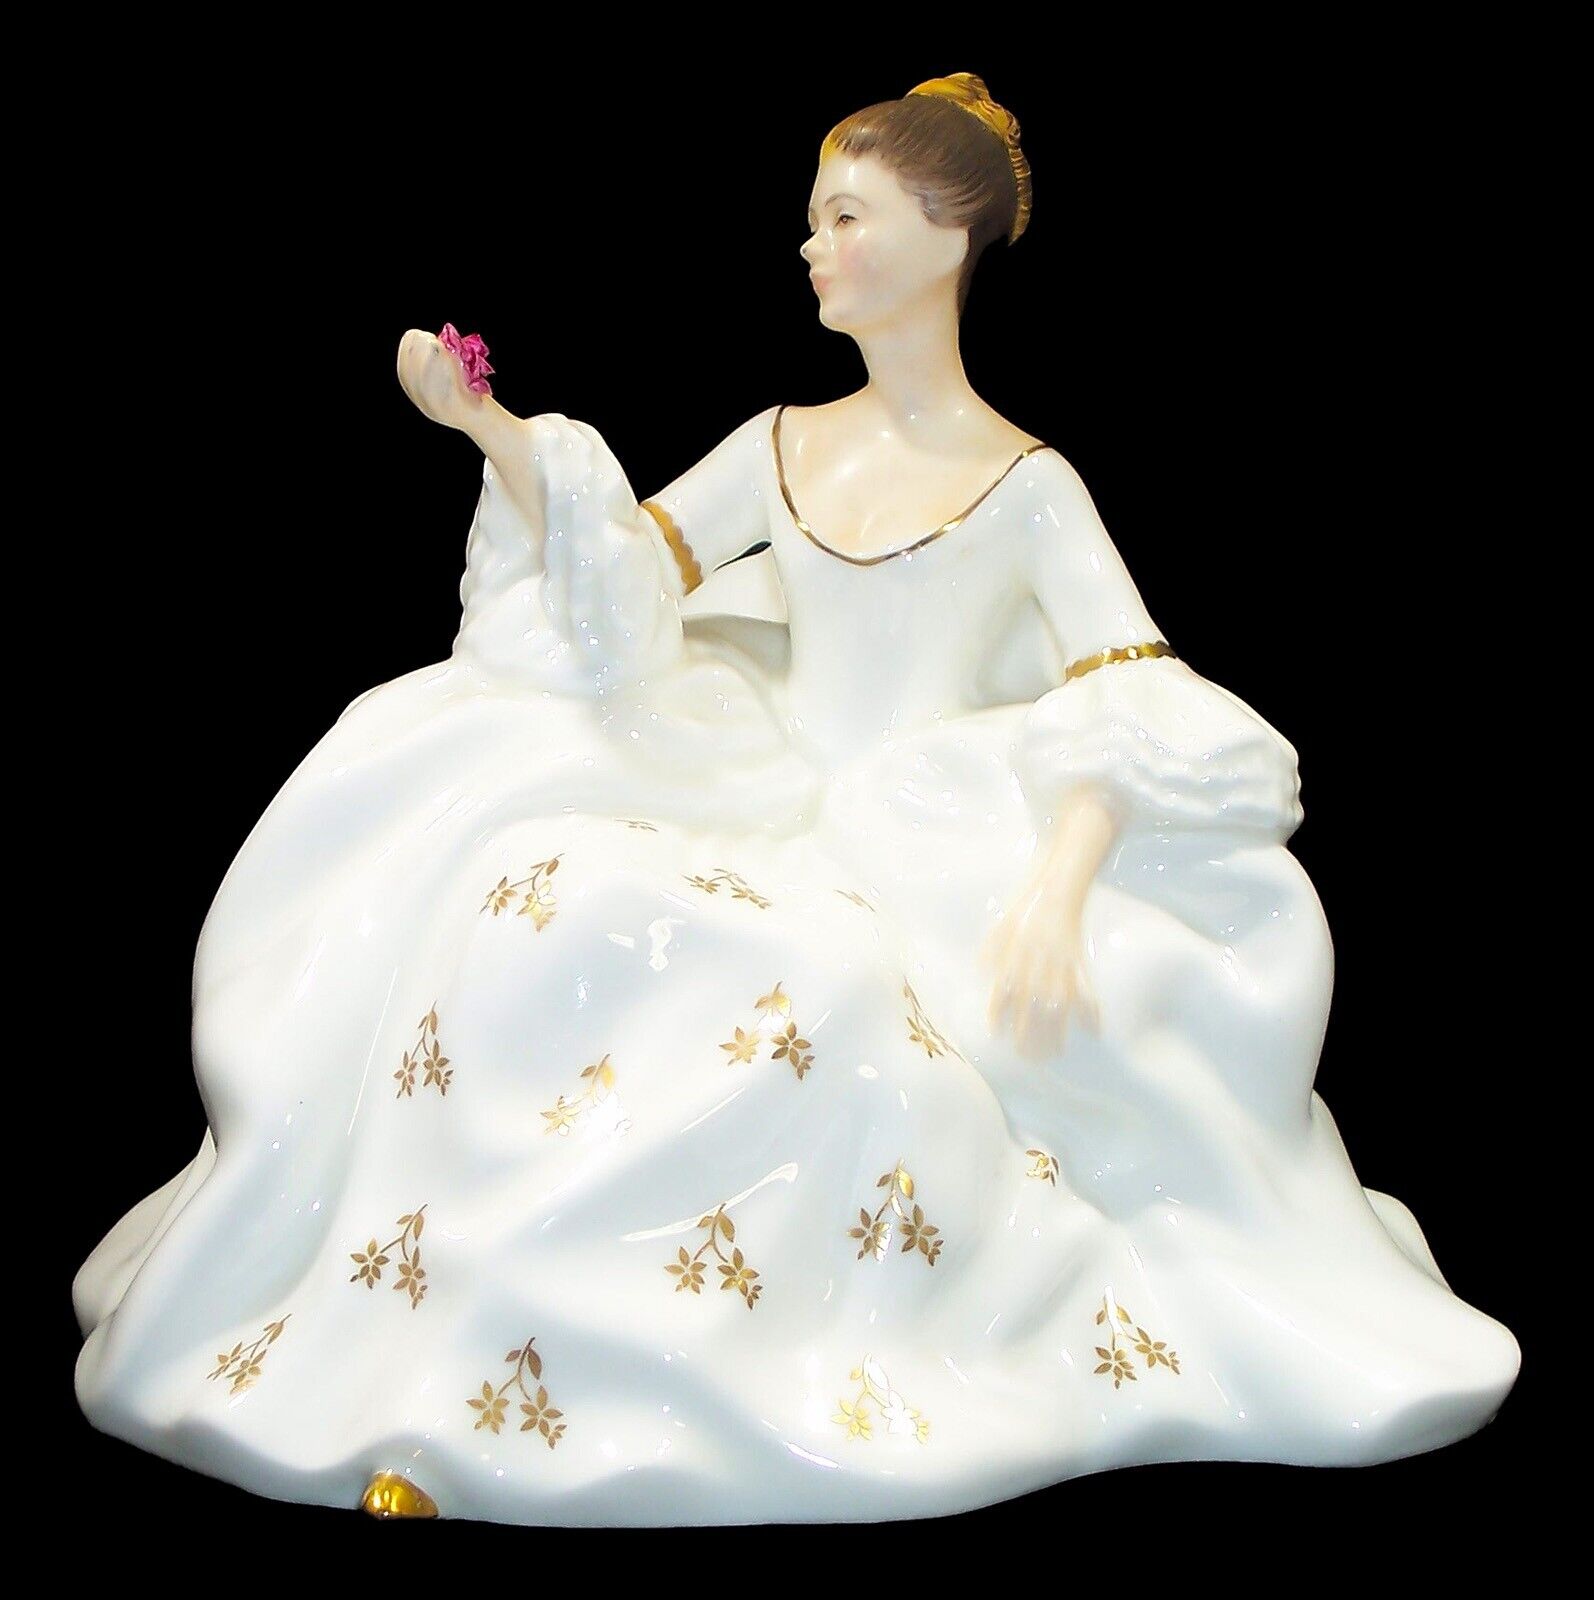 Royal Doulton Bone China Figurine “My Love” HN2339, 1965, 7” Wide 6.5” High